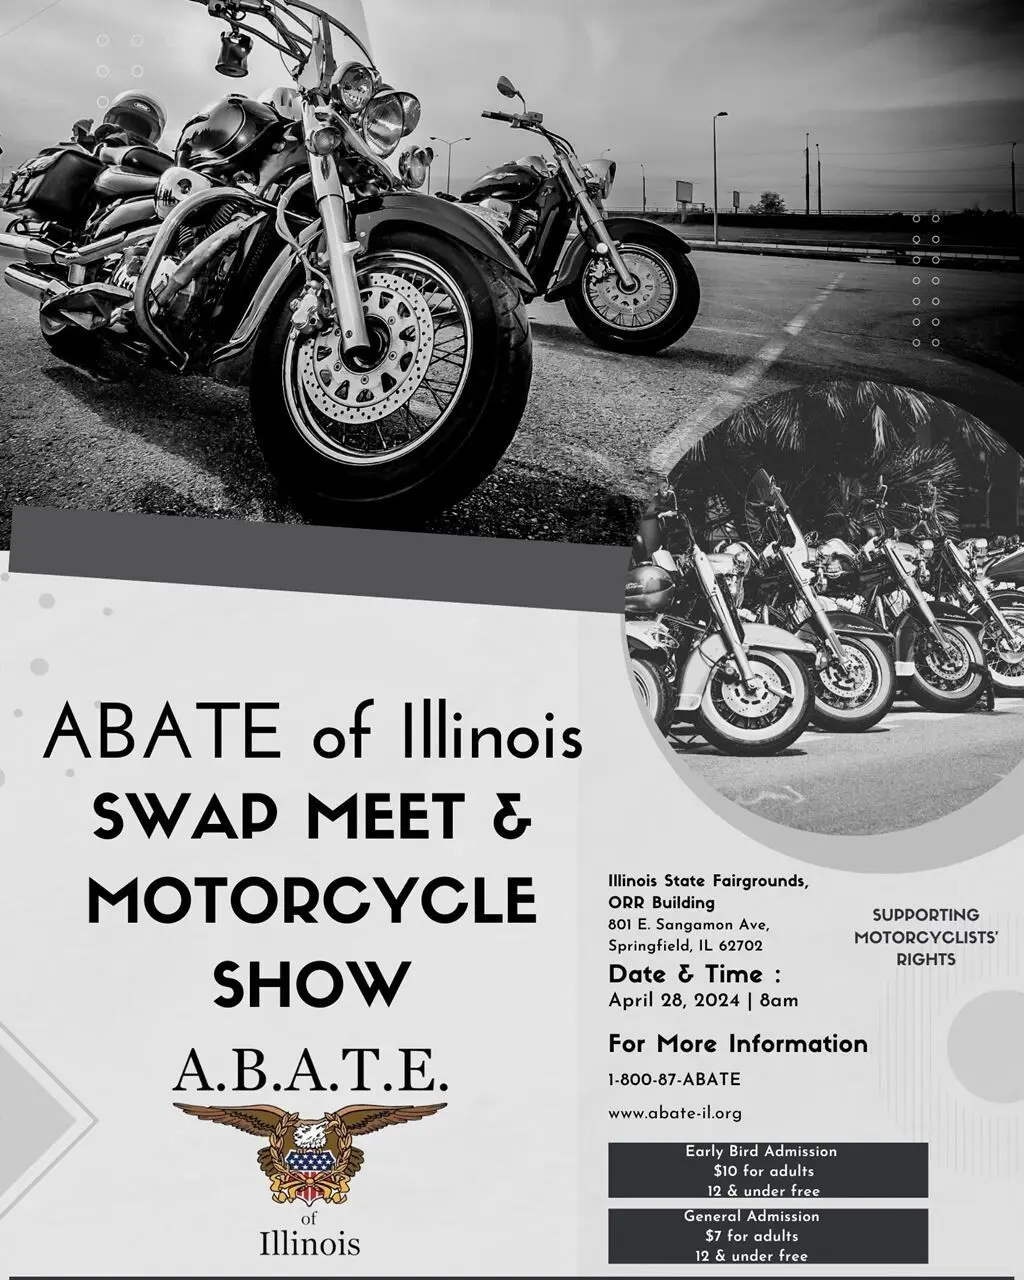 ABANTE of Illinois SWAP MEET & MOTORCYCLE SHOW